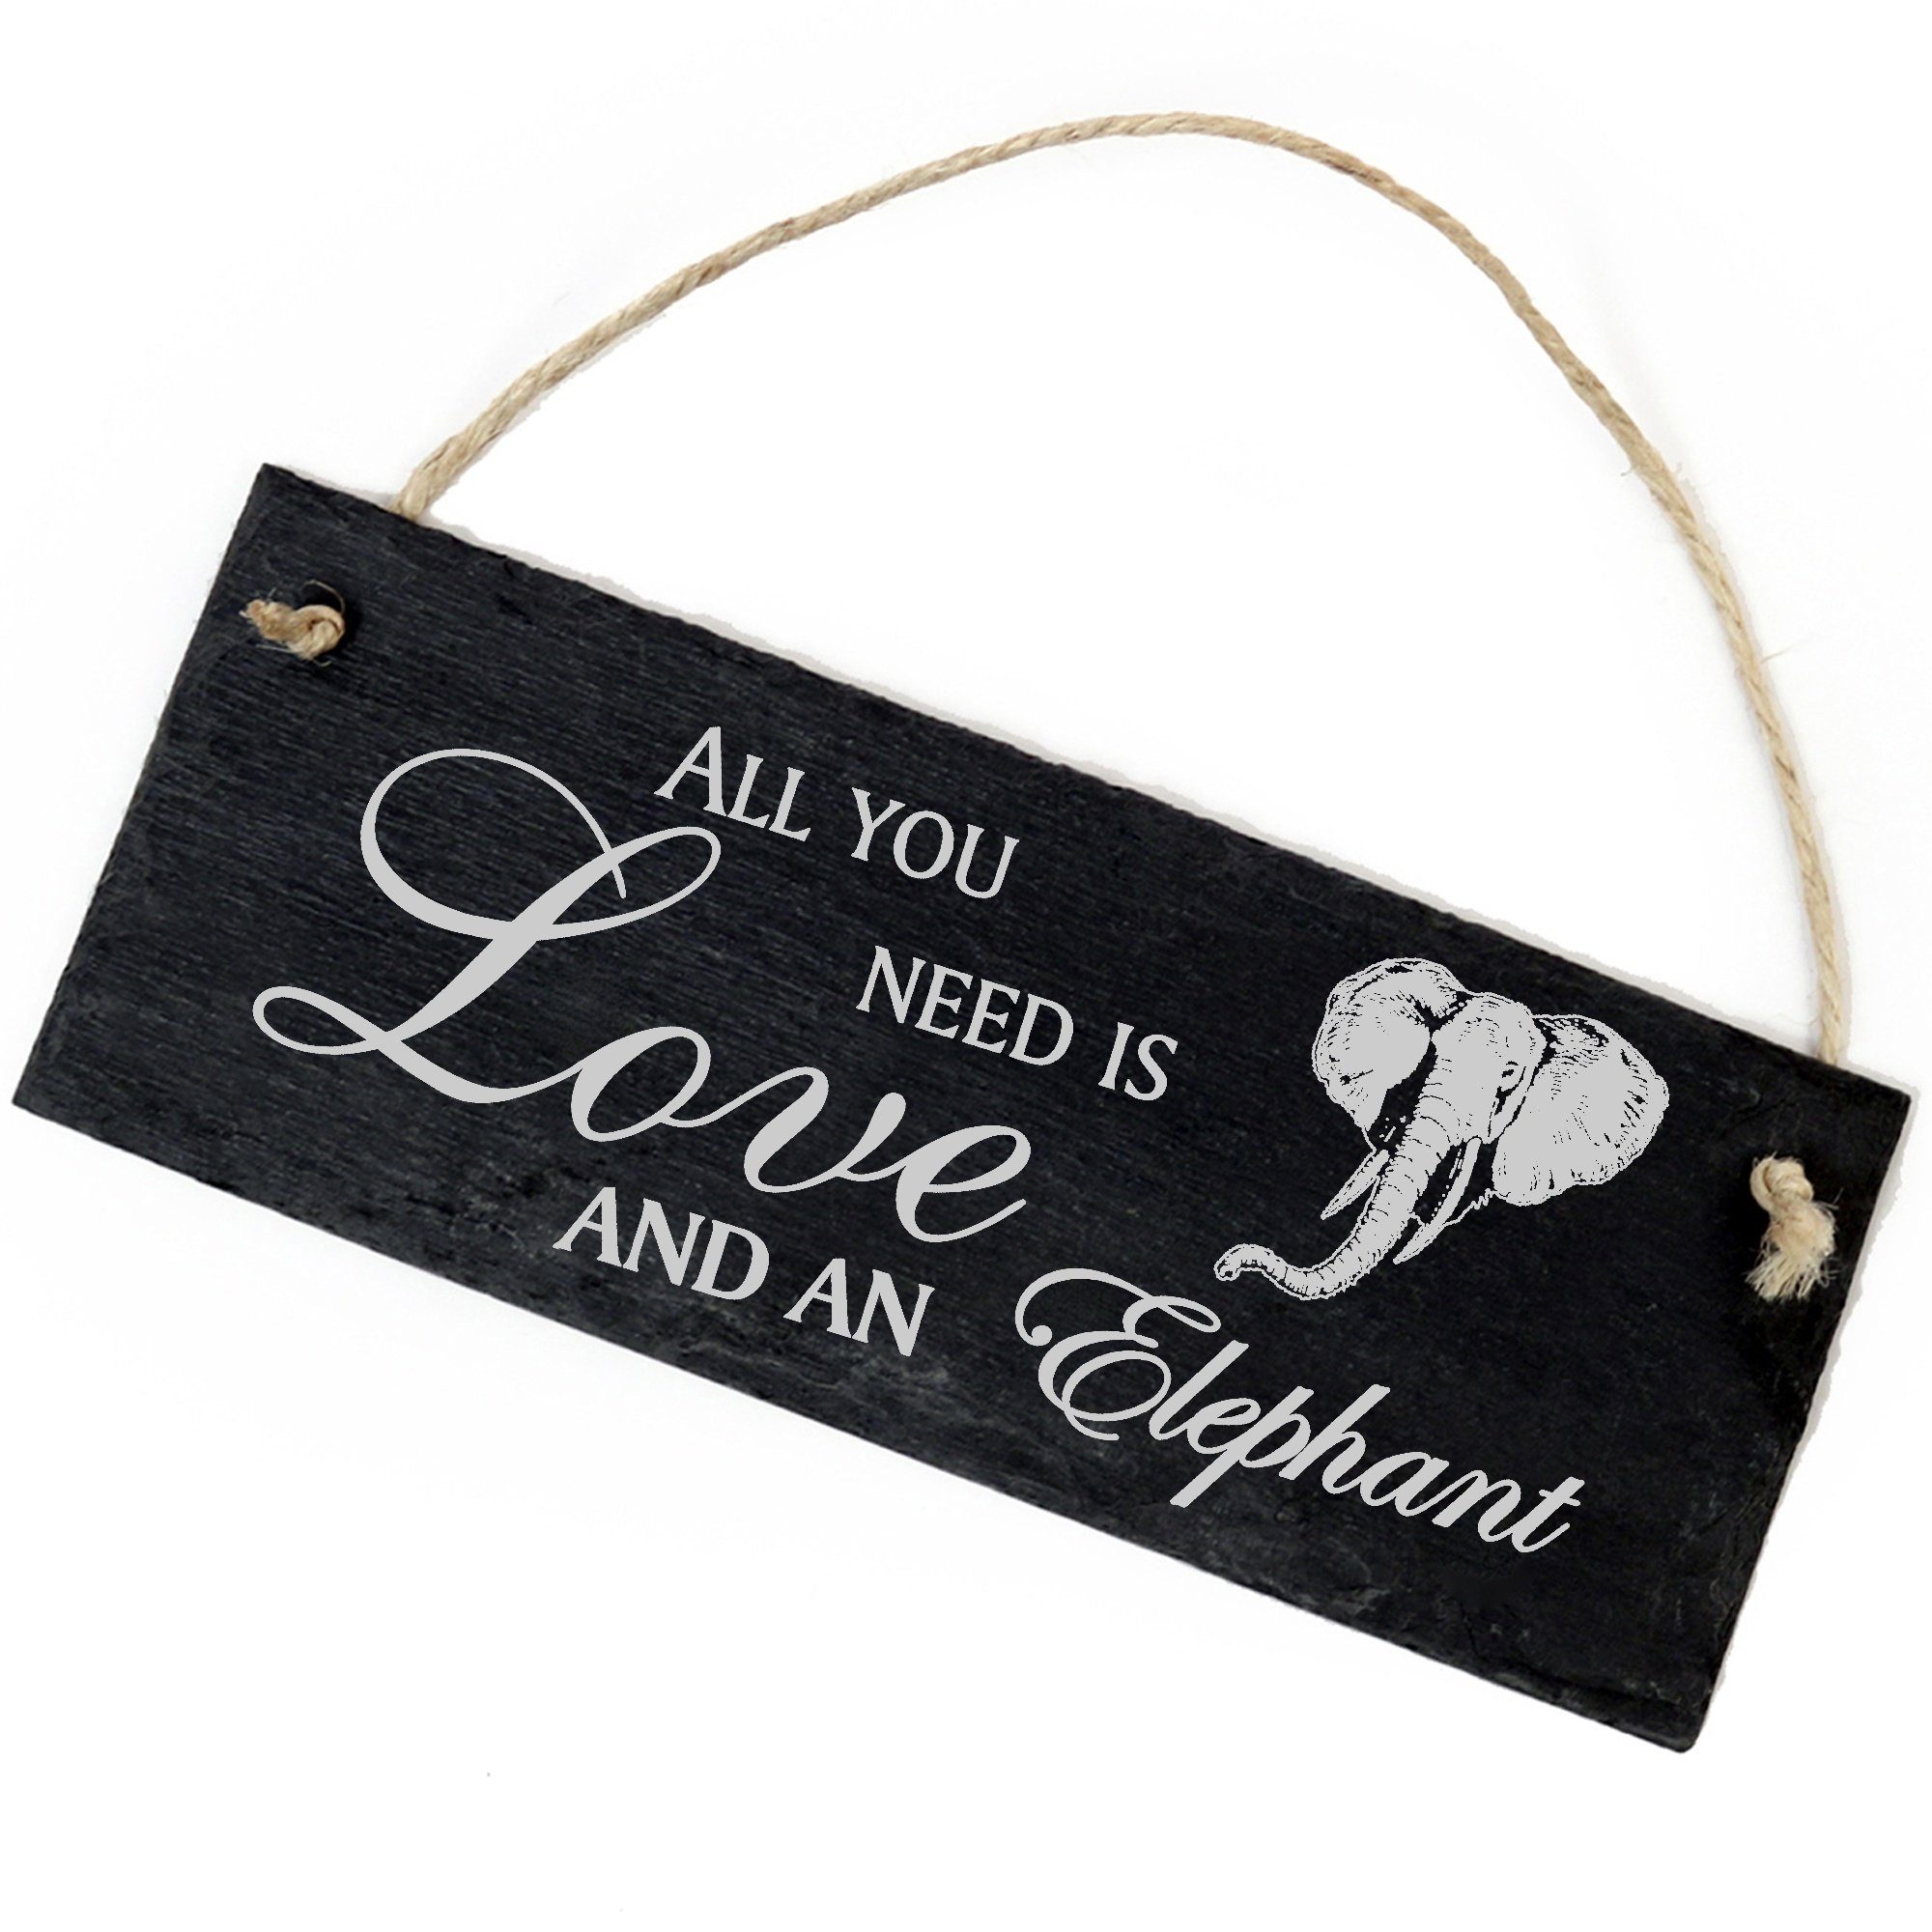 22x8cm Elephant Hängedekoration All is need Love and Dekolando Elefant an Kopf you